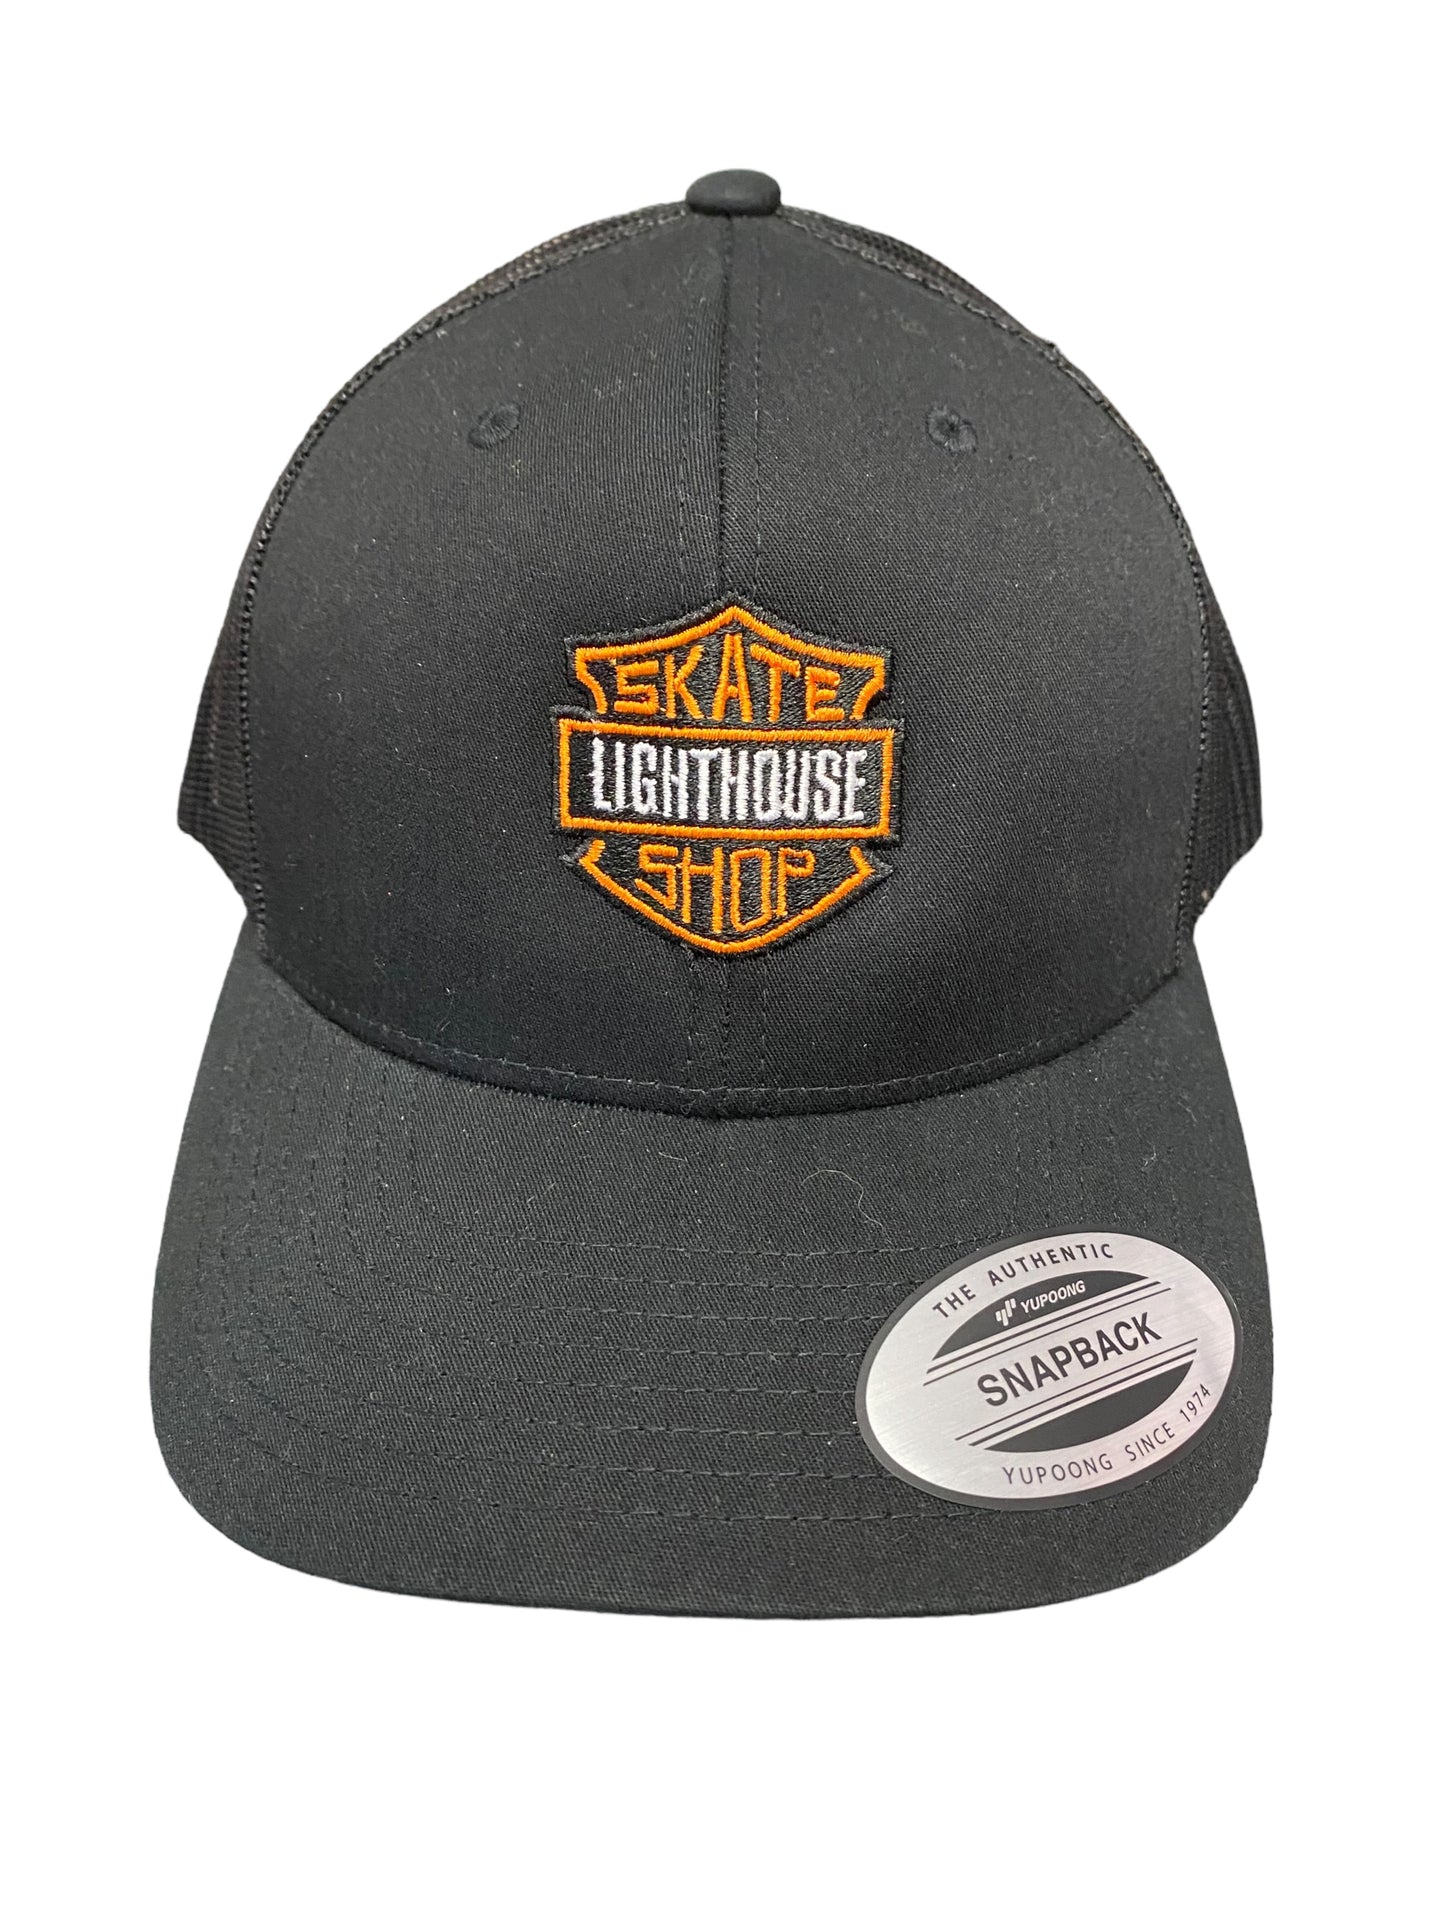 Lighthouse Harley Hat